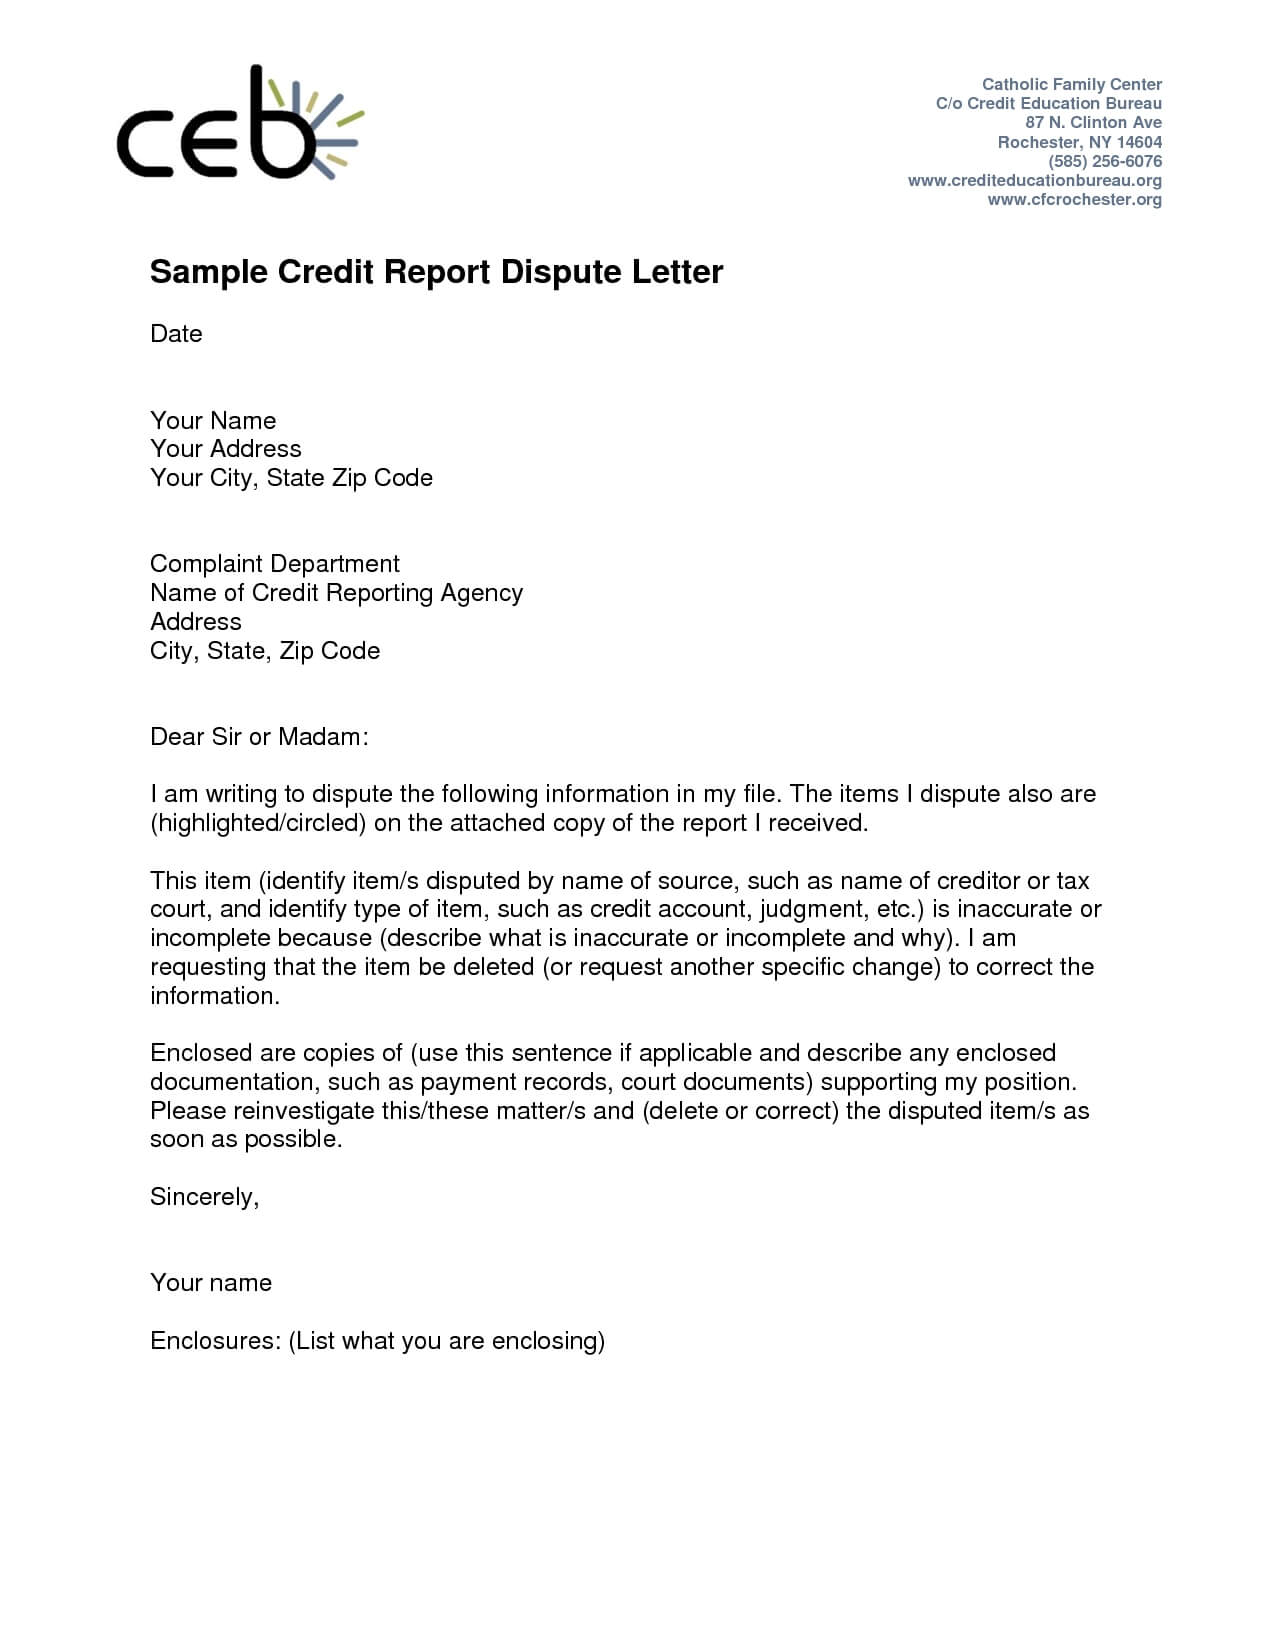 Report Examples Credit Dispute Letter Templates Acurnamedia In Credit Report Dispute Letter Template